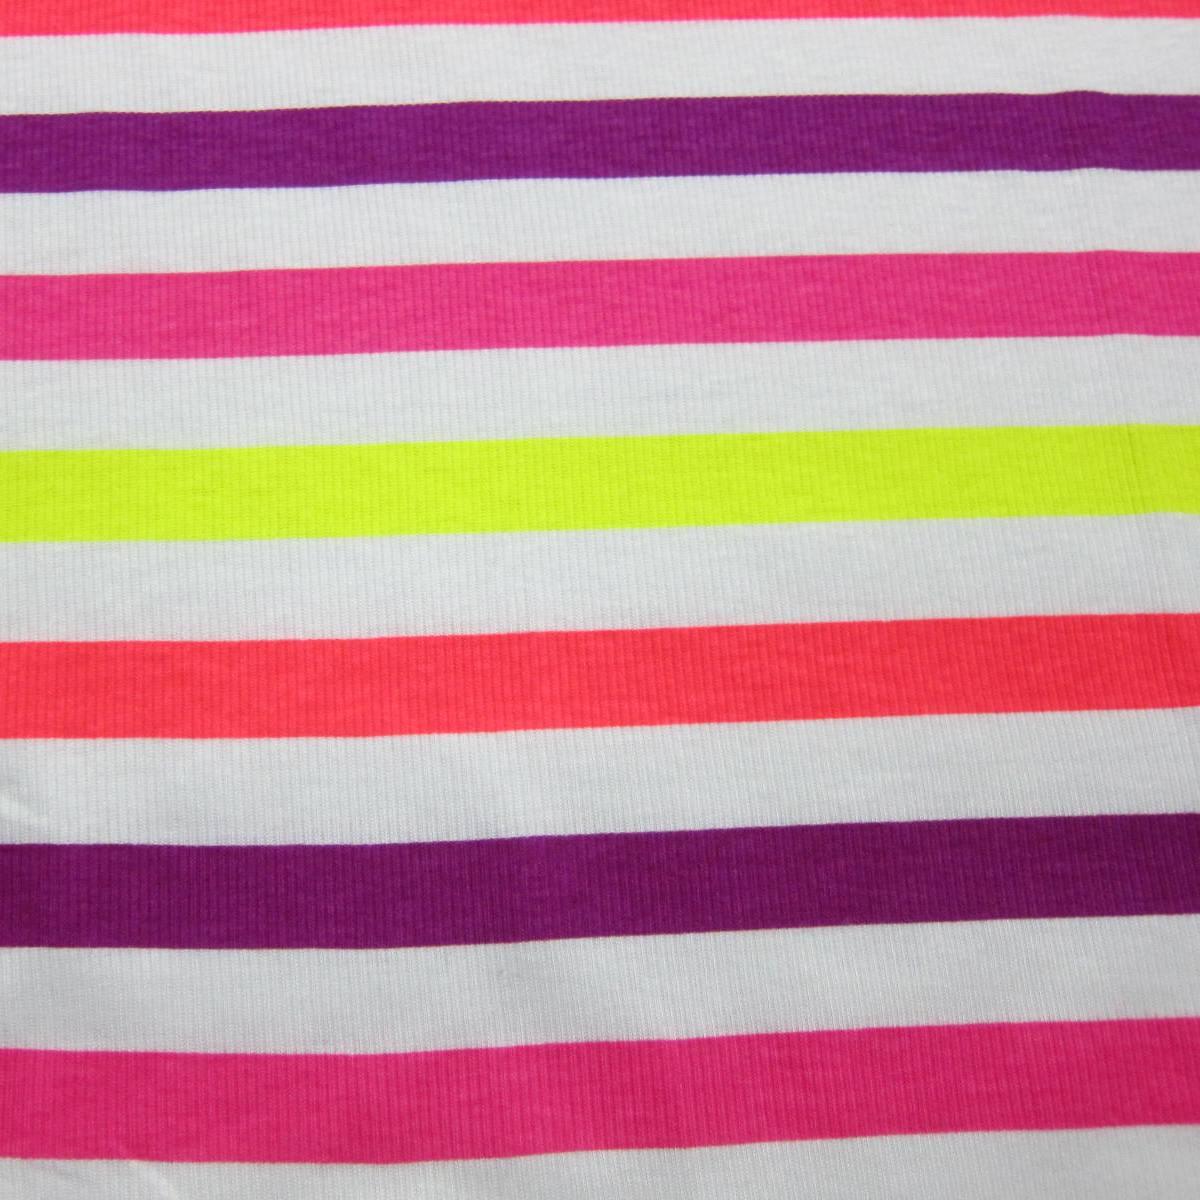 Neon Rainbow Stripe 2x2 Cotton Rib